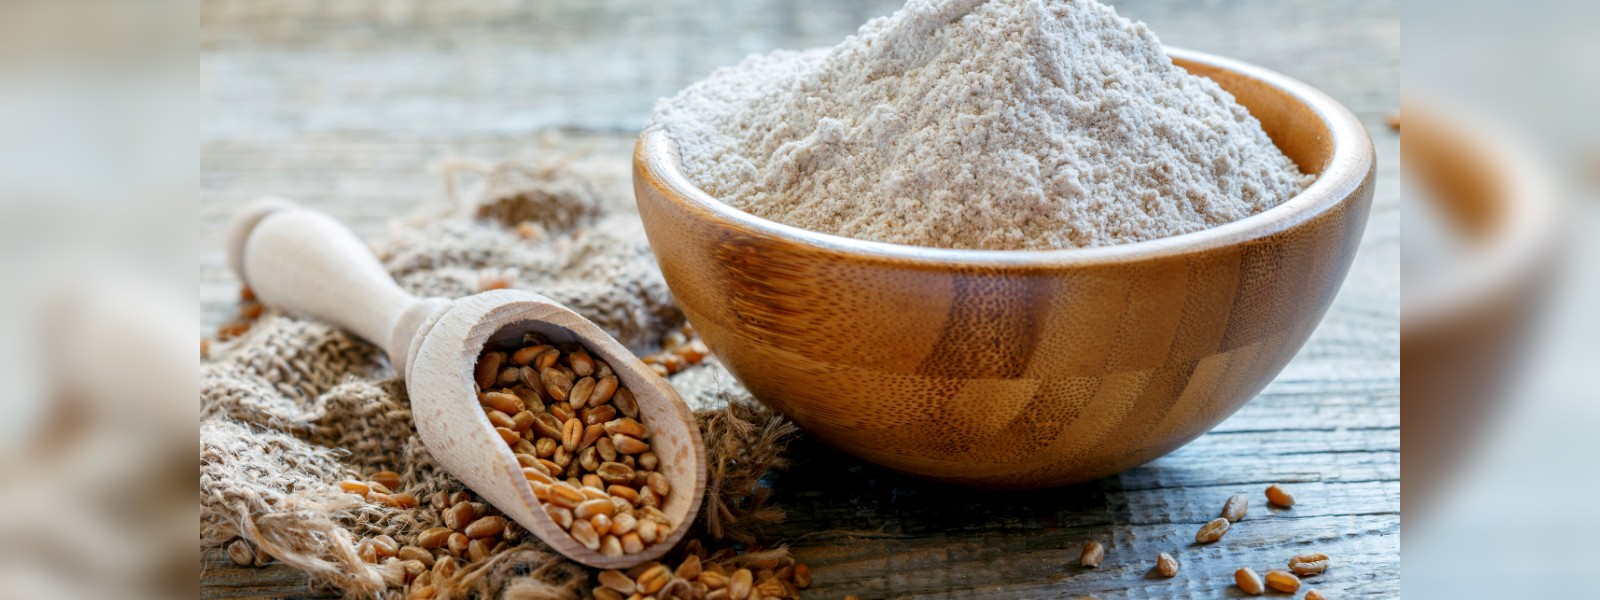 Sri Lanka reports Wheat Flour Shortage; Wholesale price up by Rs. 17/- per kilo